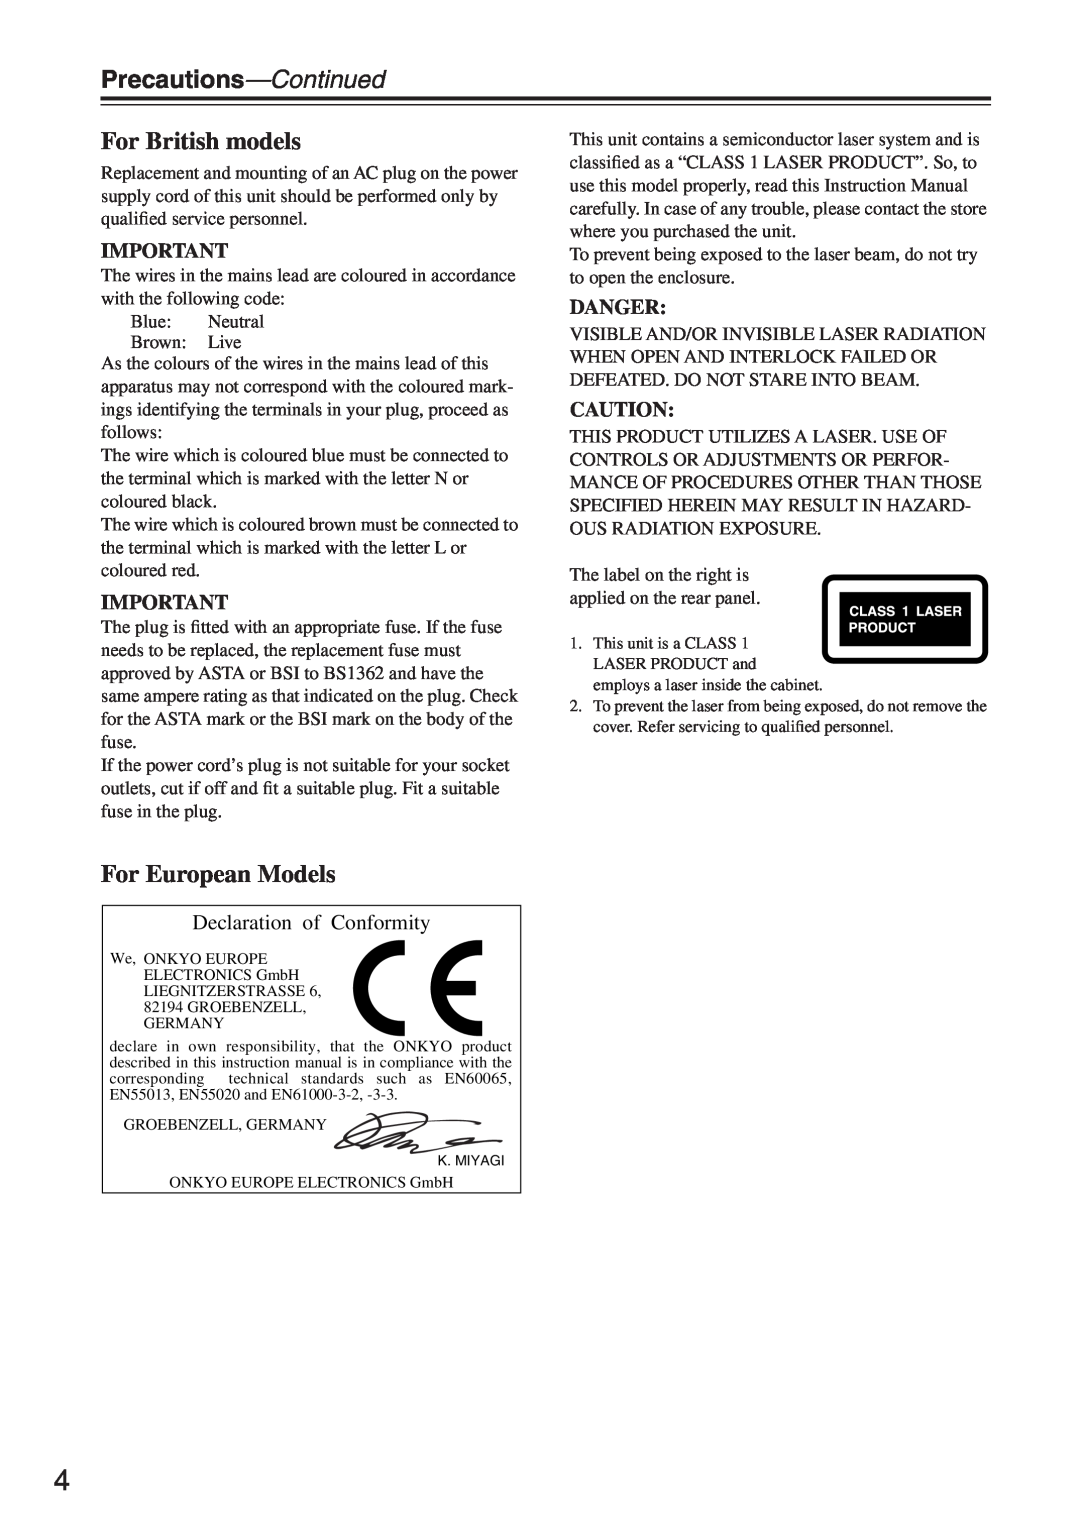 Onkyo DX-7555 Precautions-Continued, For British models, For European Models, Declaration of Conformity, Danger 